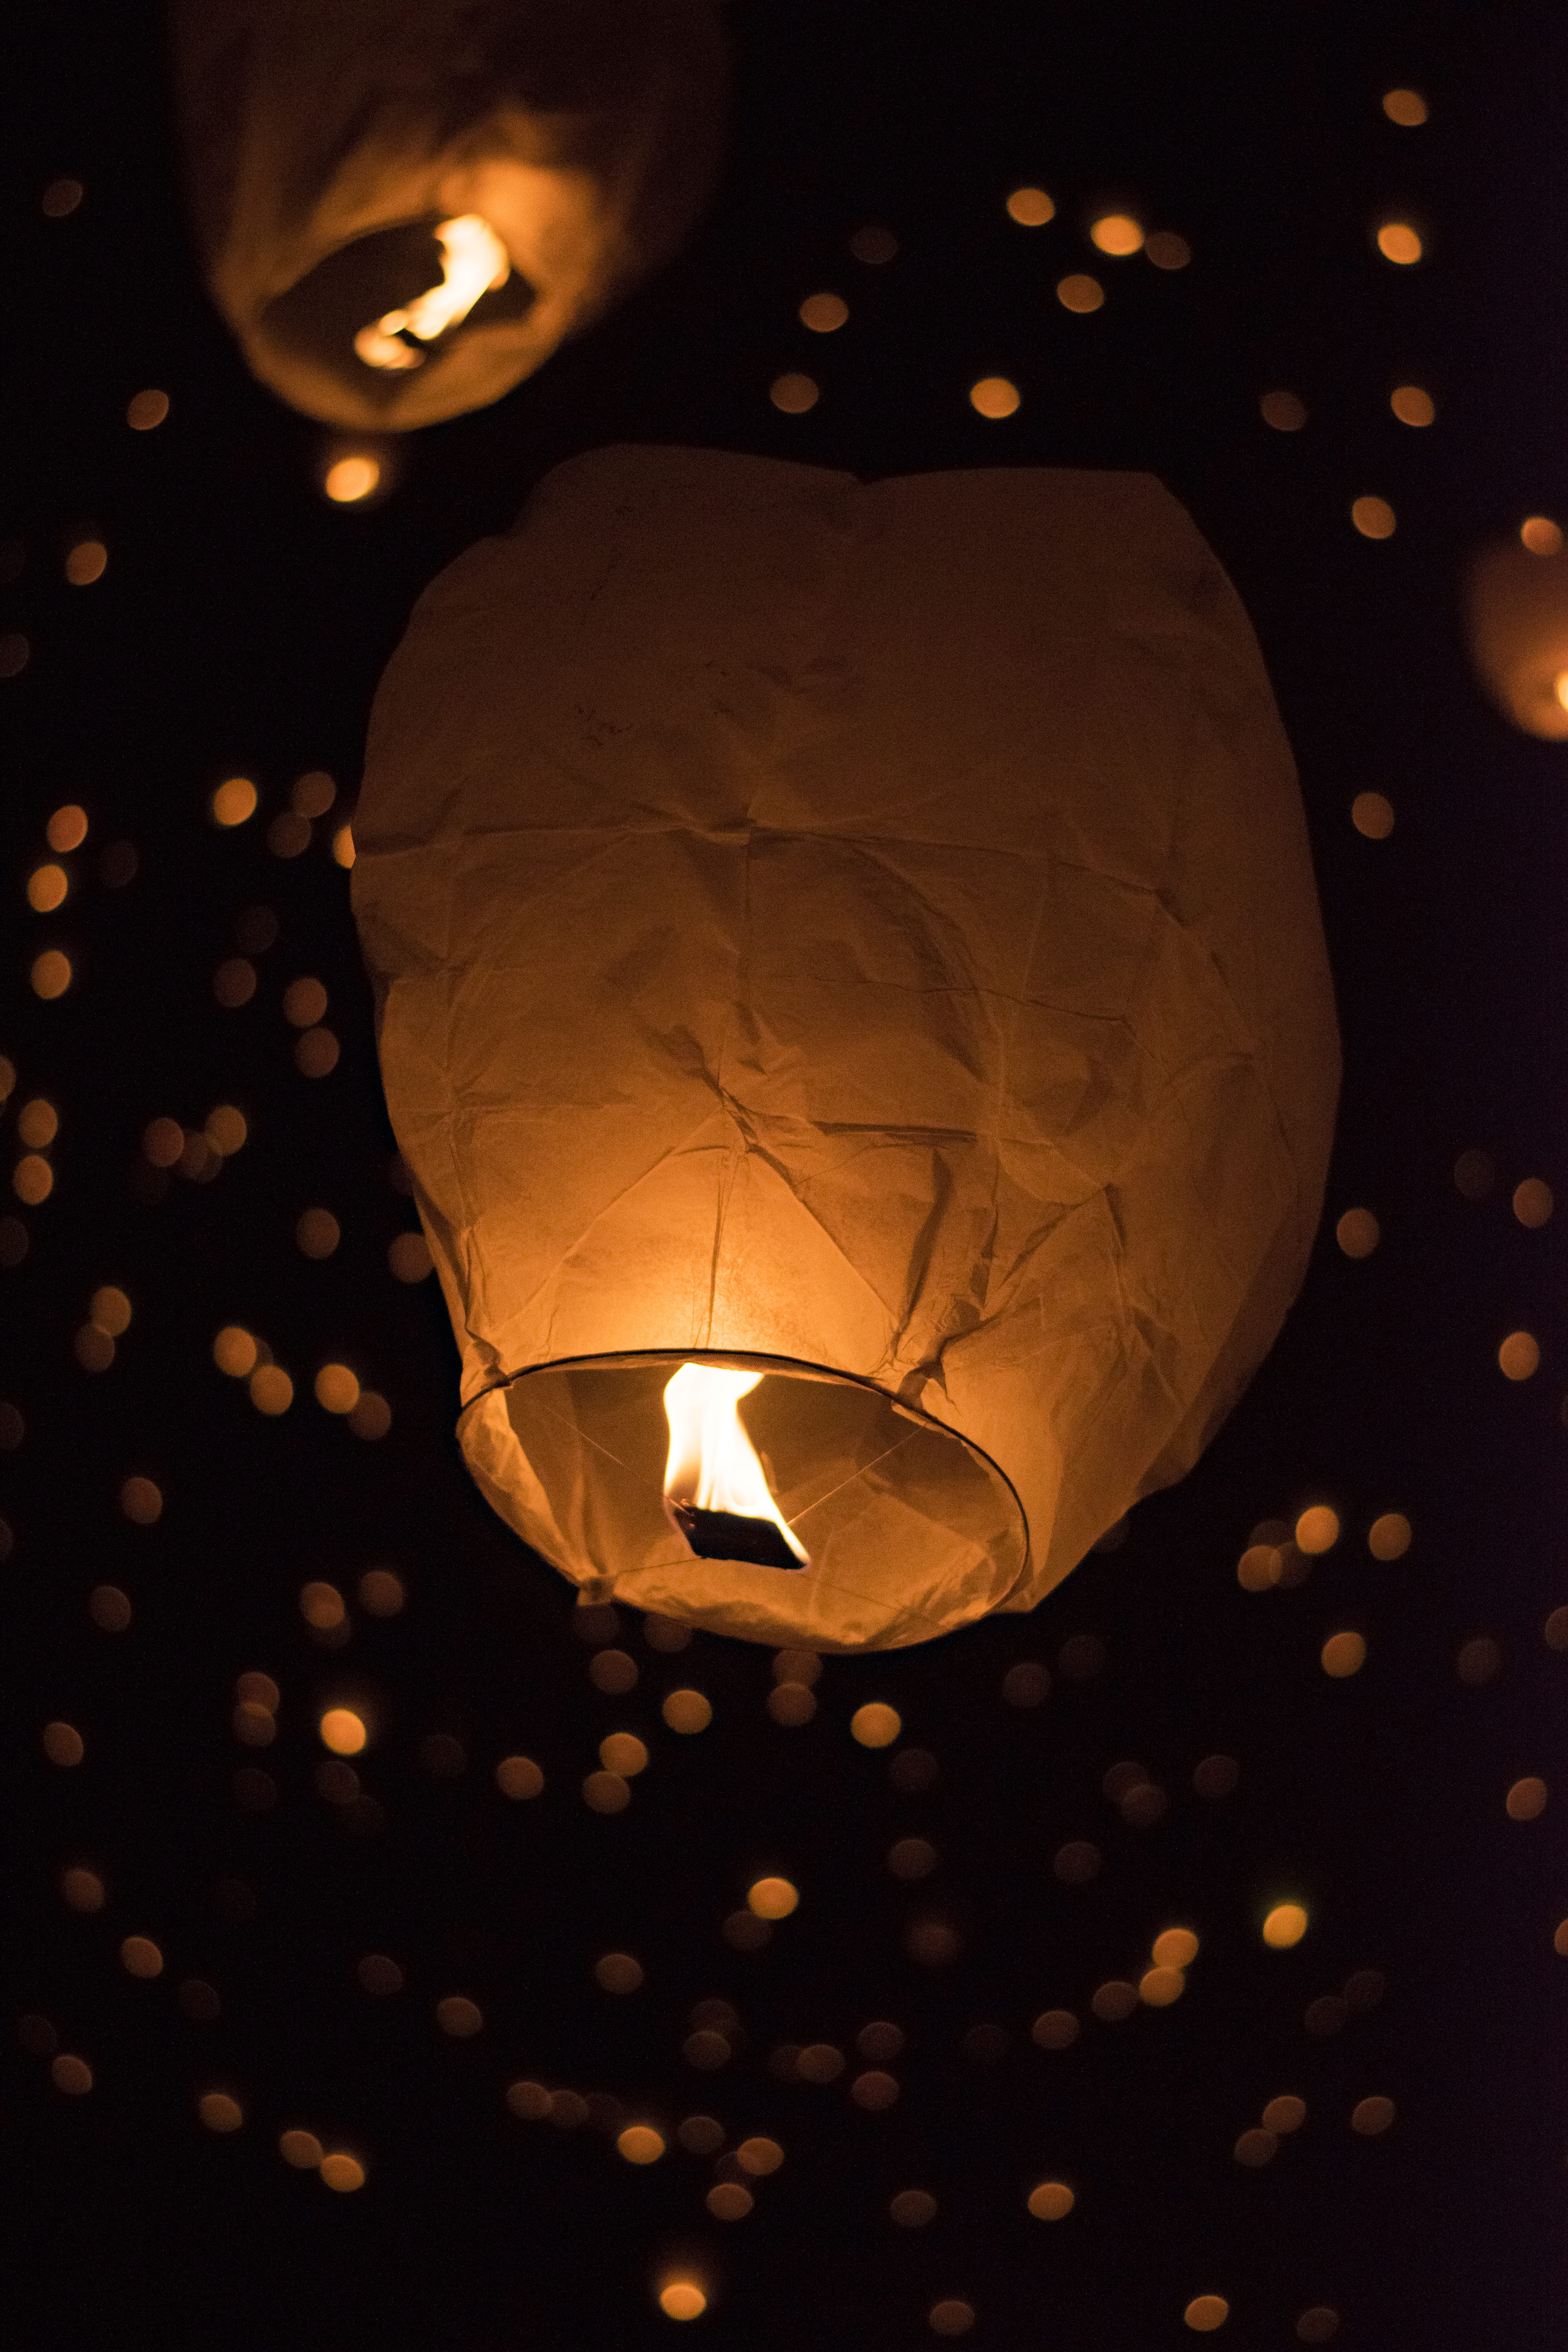 sky lantern, lamp, lampshade, festival, fire, adventure, lantern festival